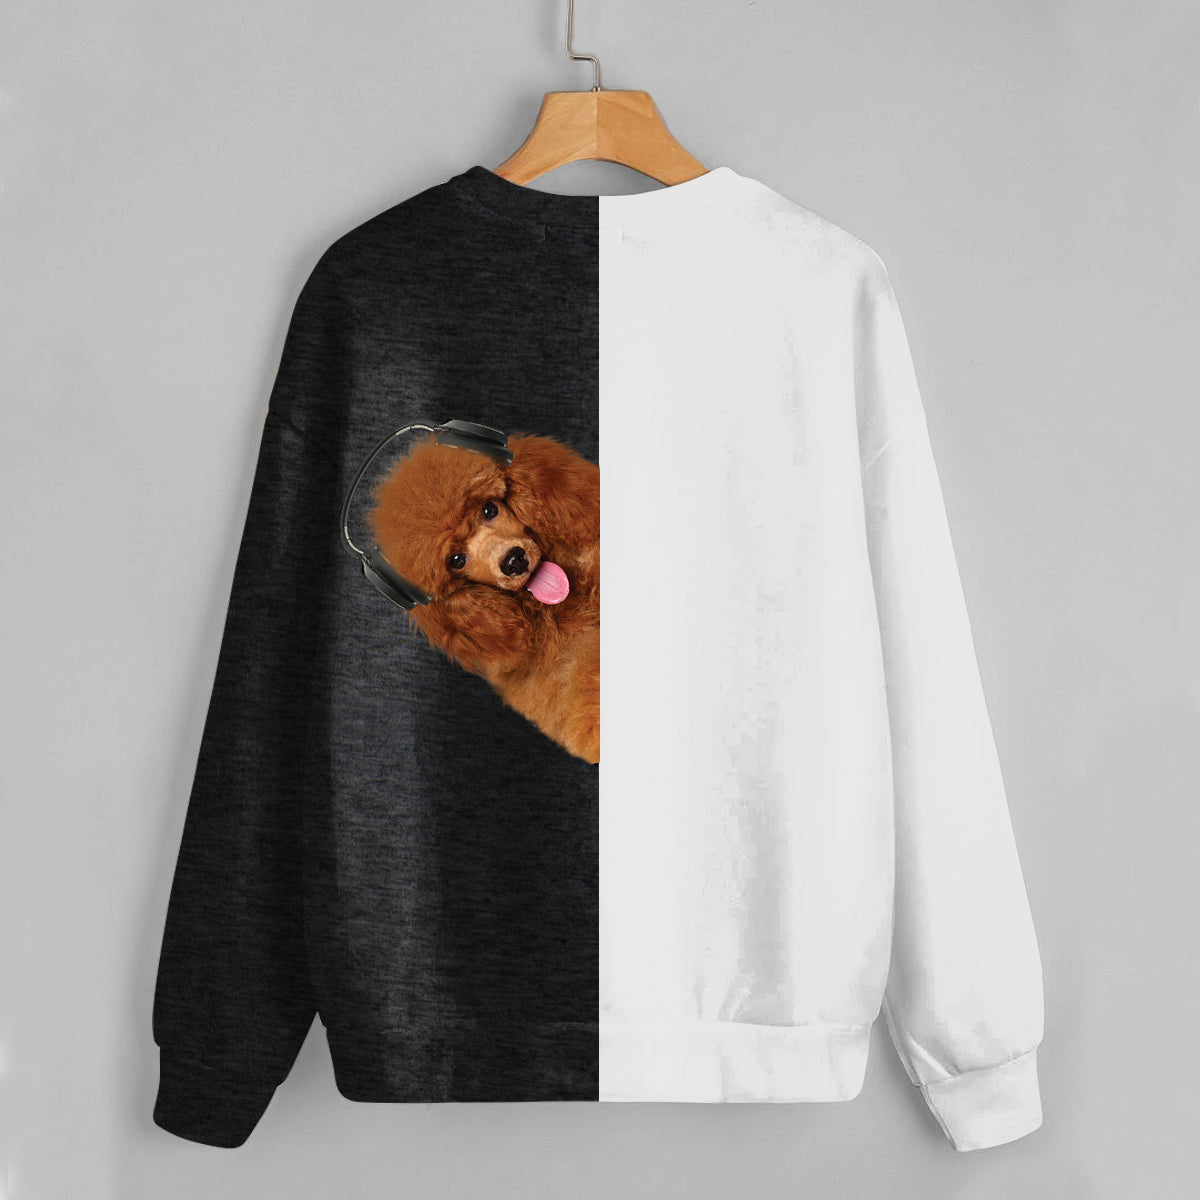 Funny Happy Time - Poodle Sweatshirt V5